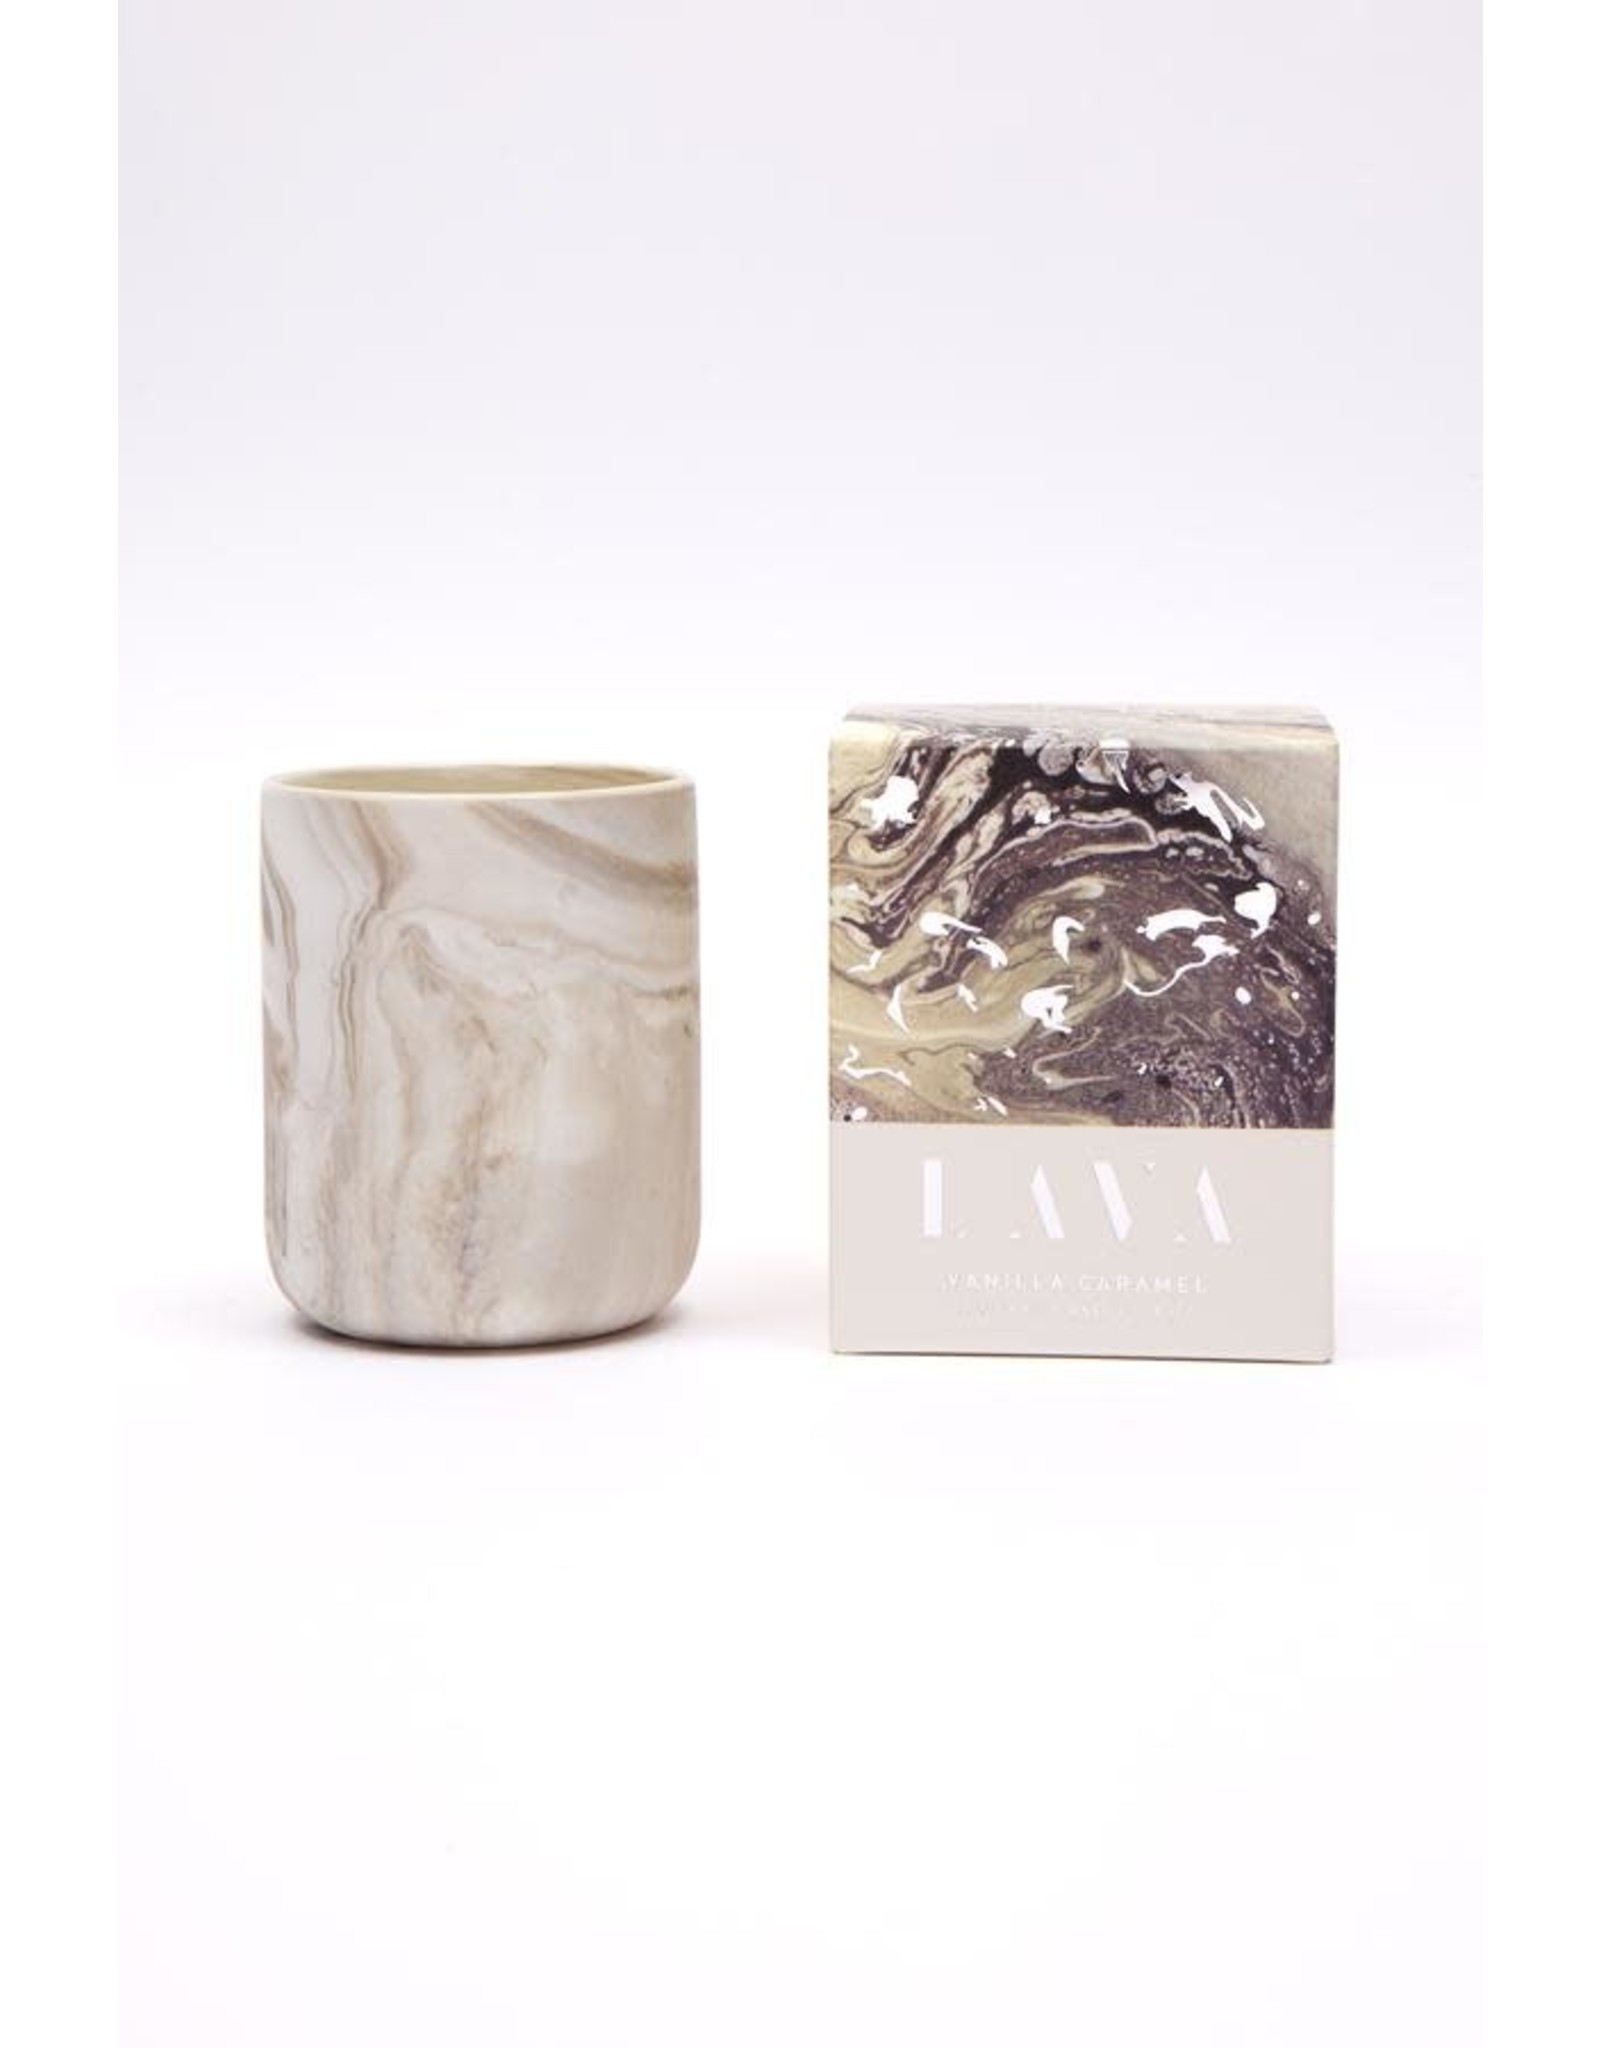 Lava - Vanilla Caramel Candle